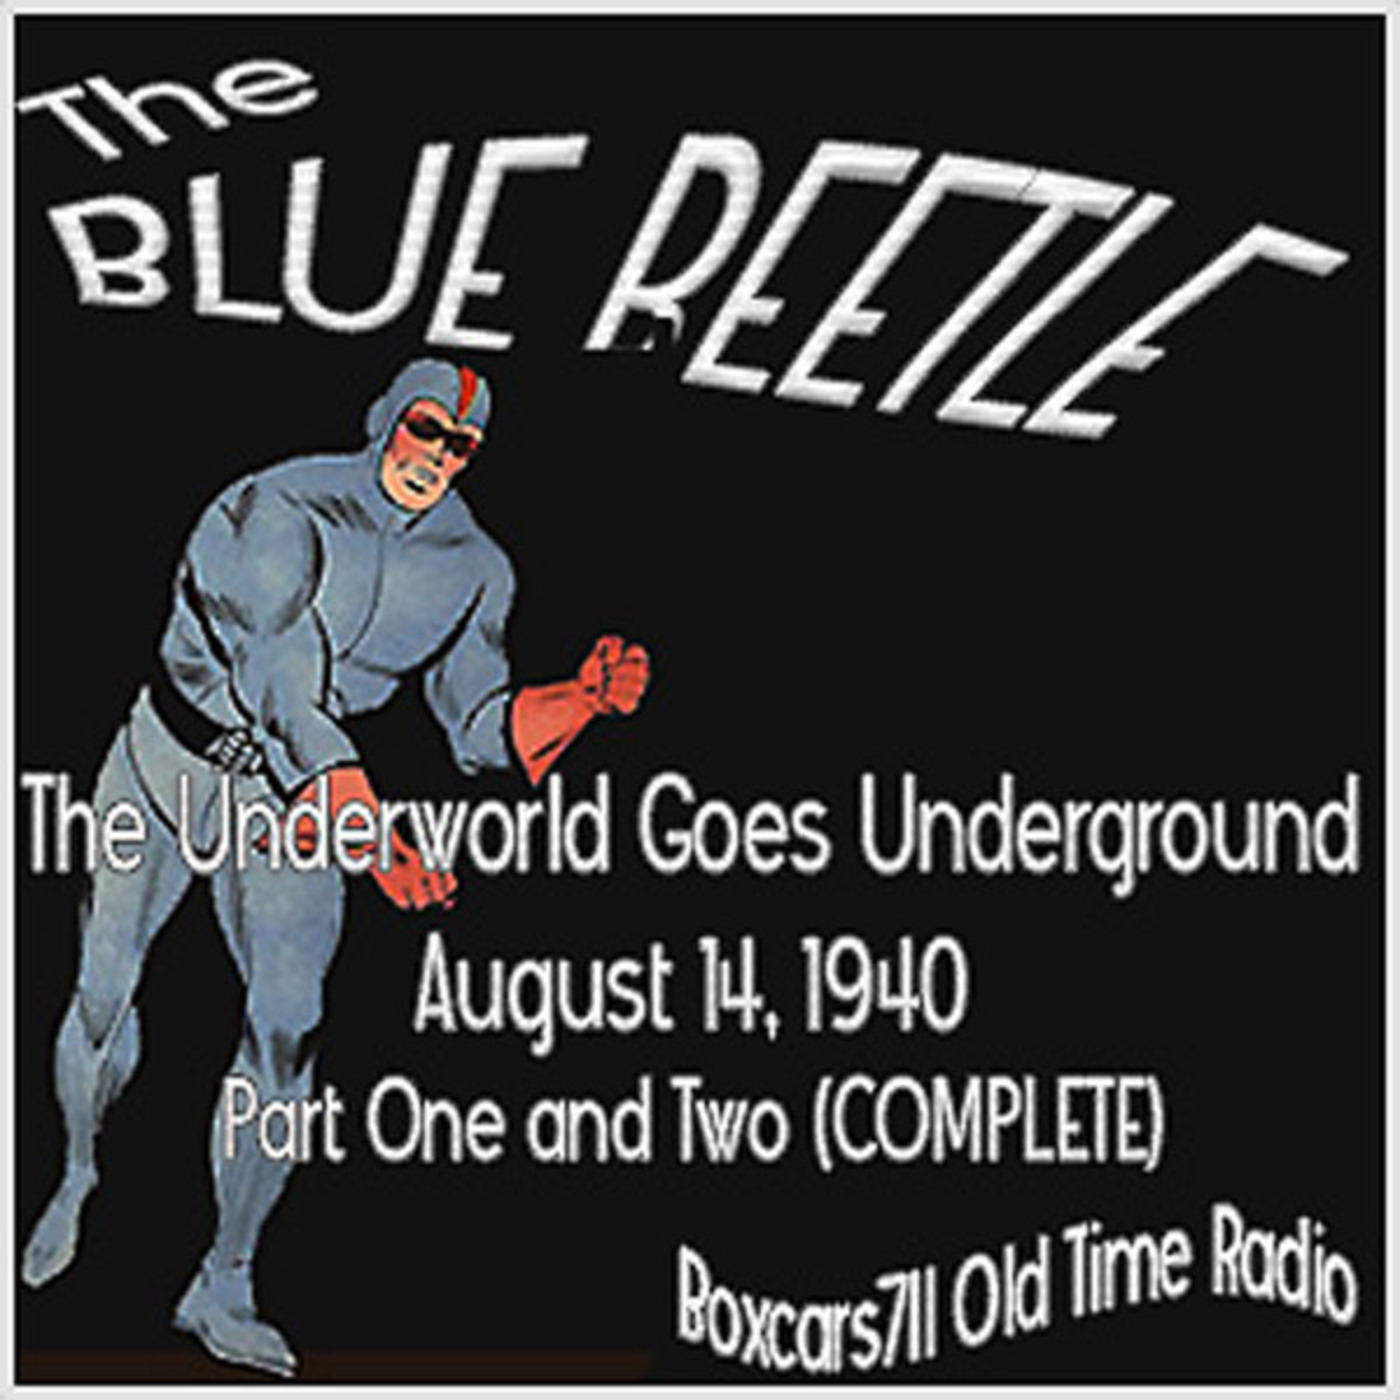 Episode 9711: Blue Beetle - 